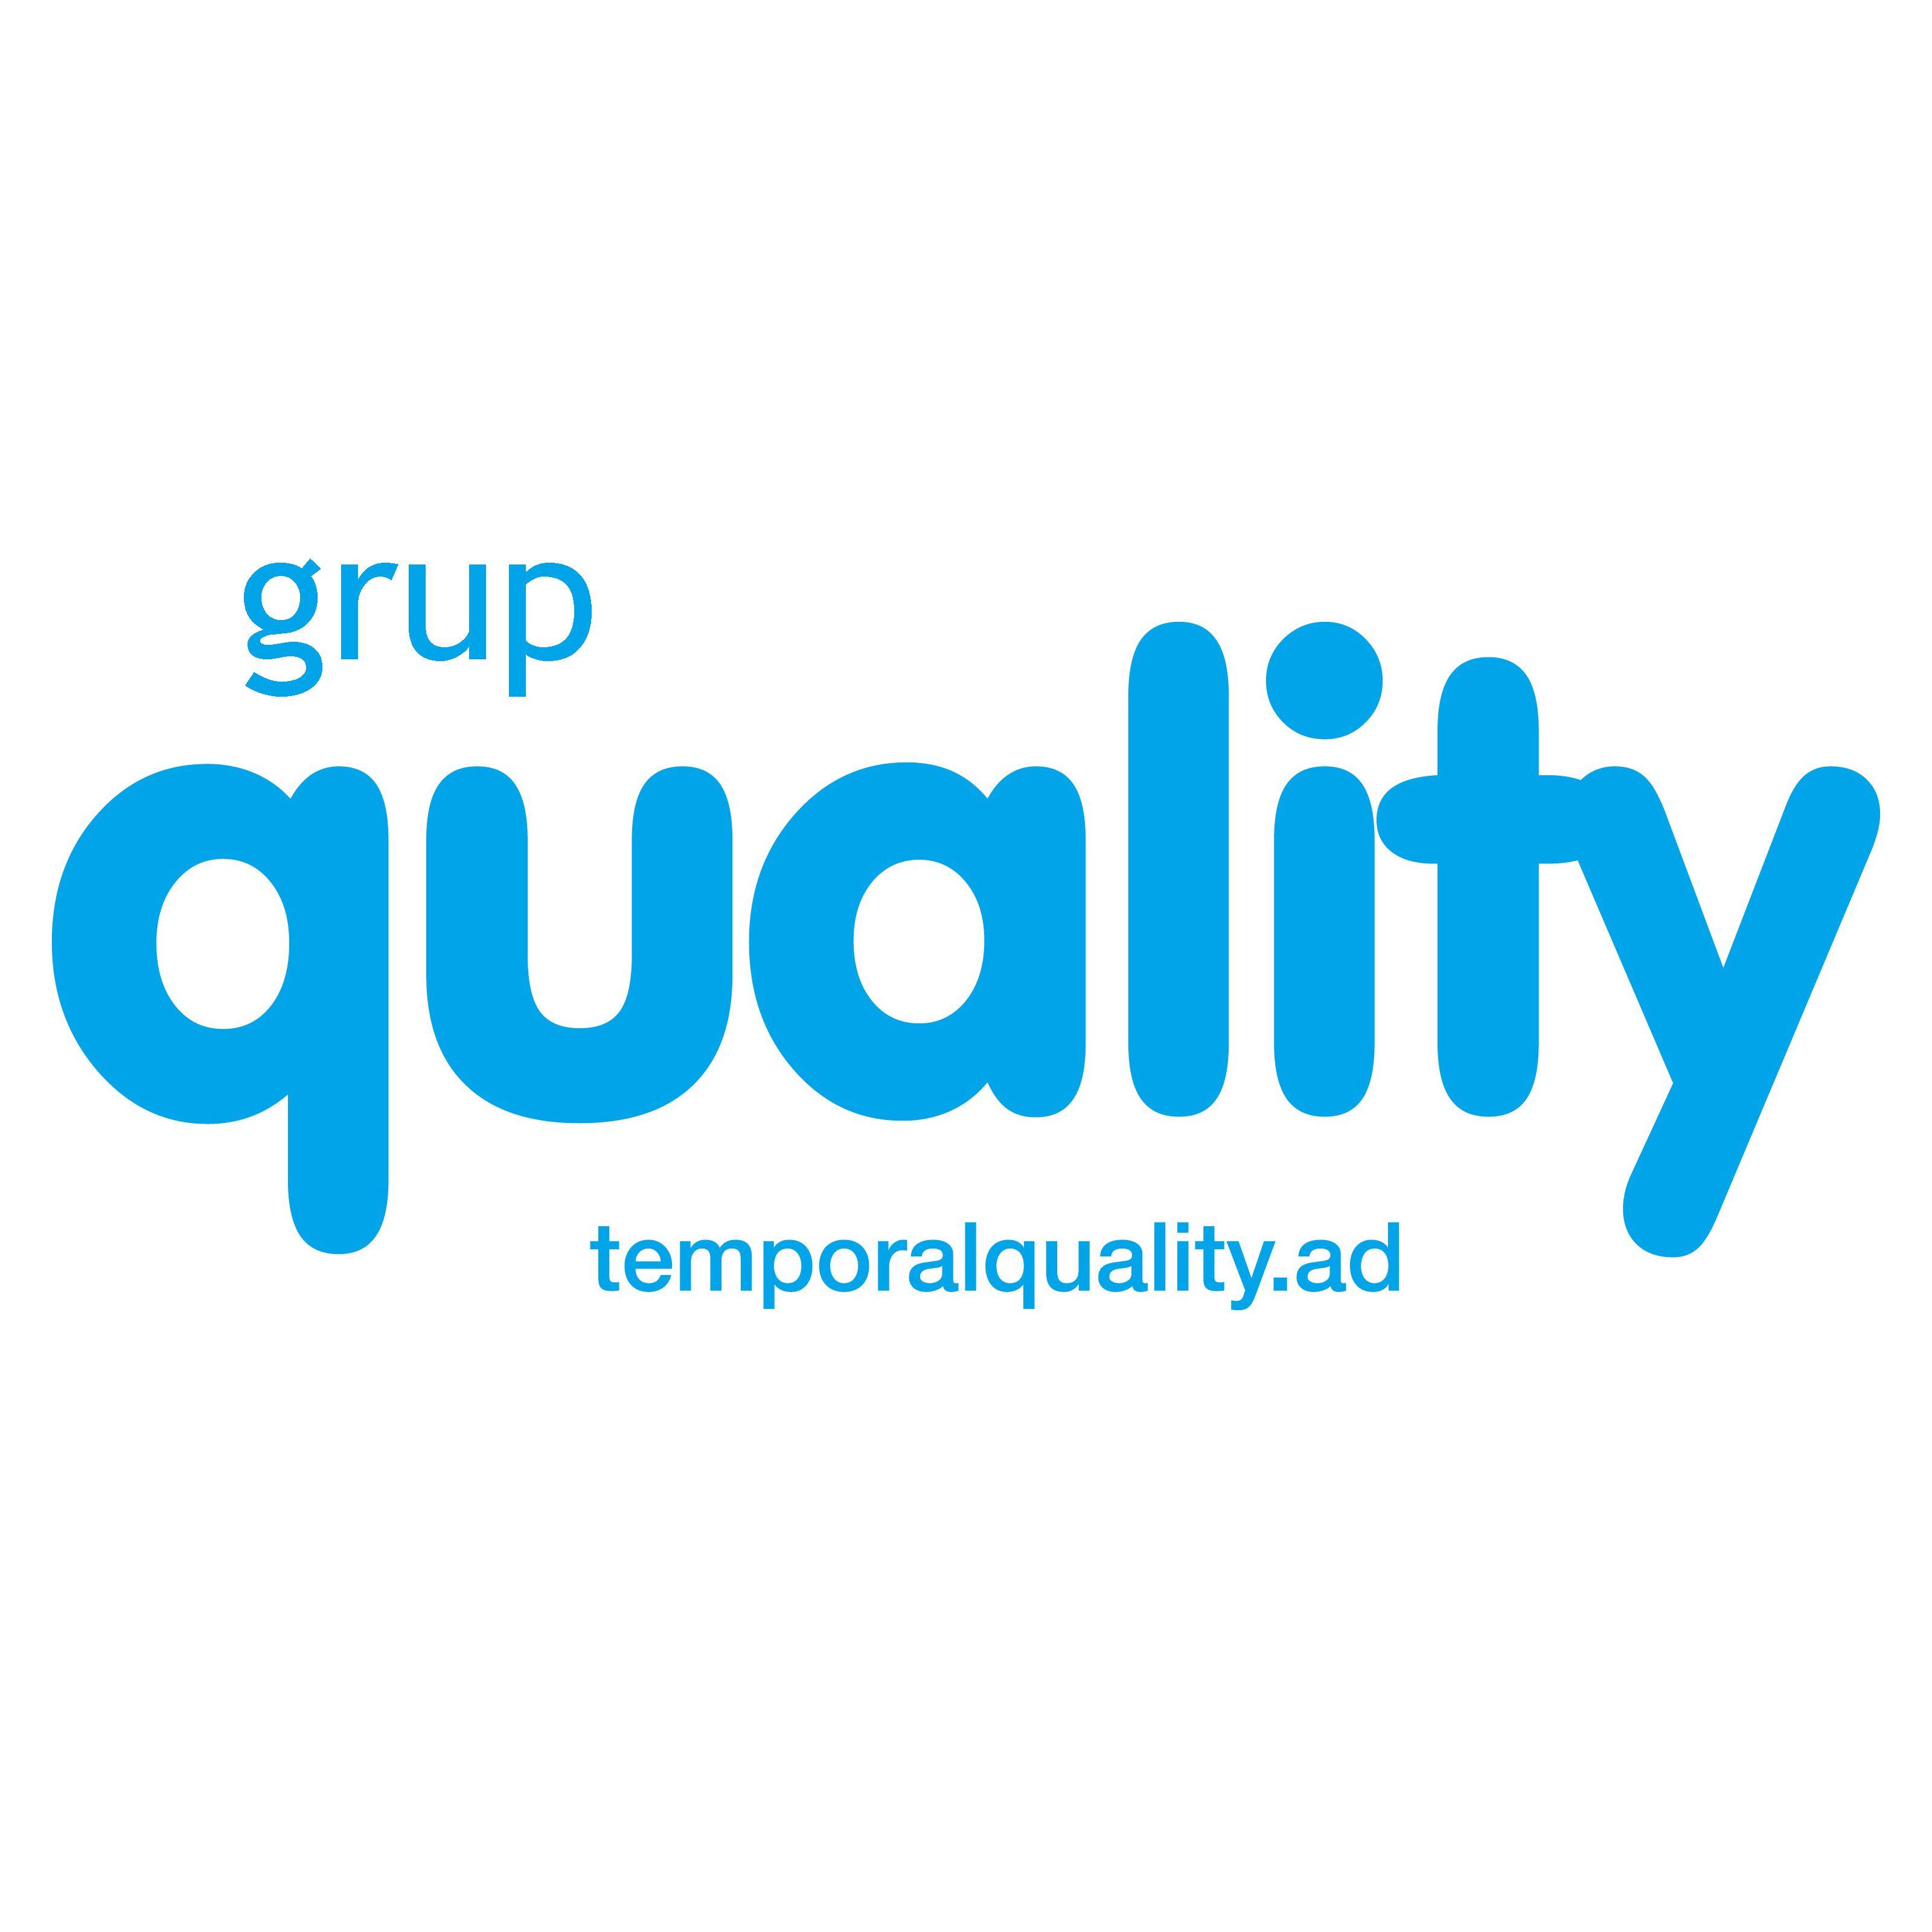 Kuraray Logo - Logo-grup-quality.jpg